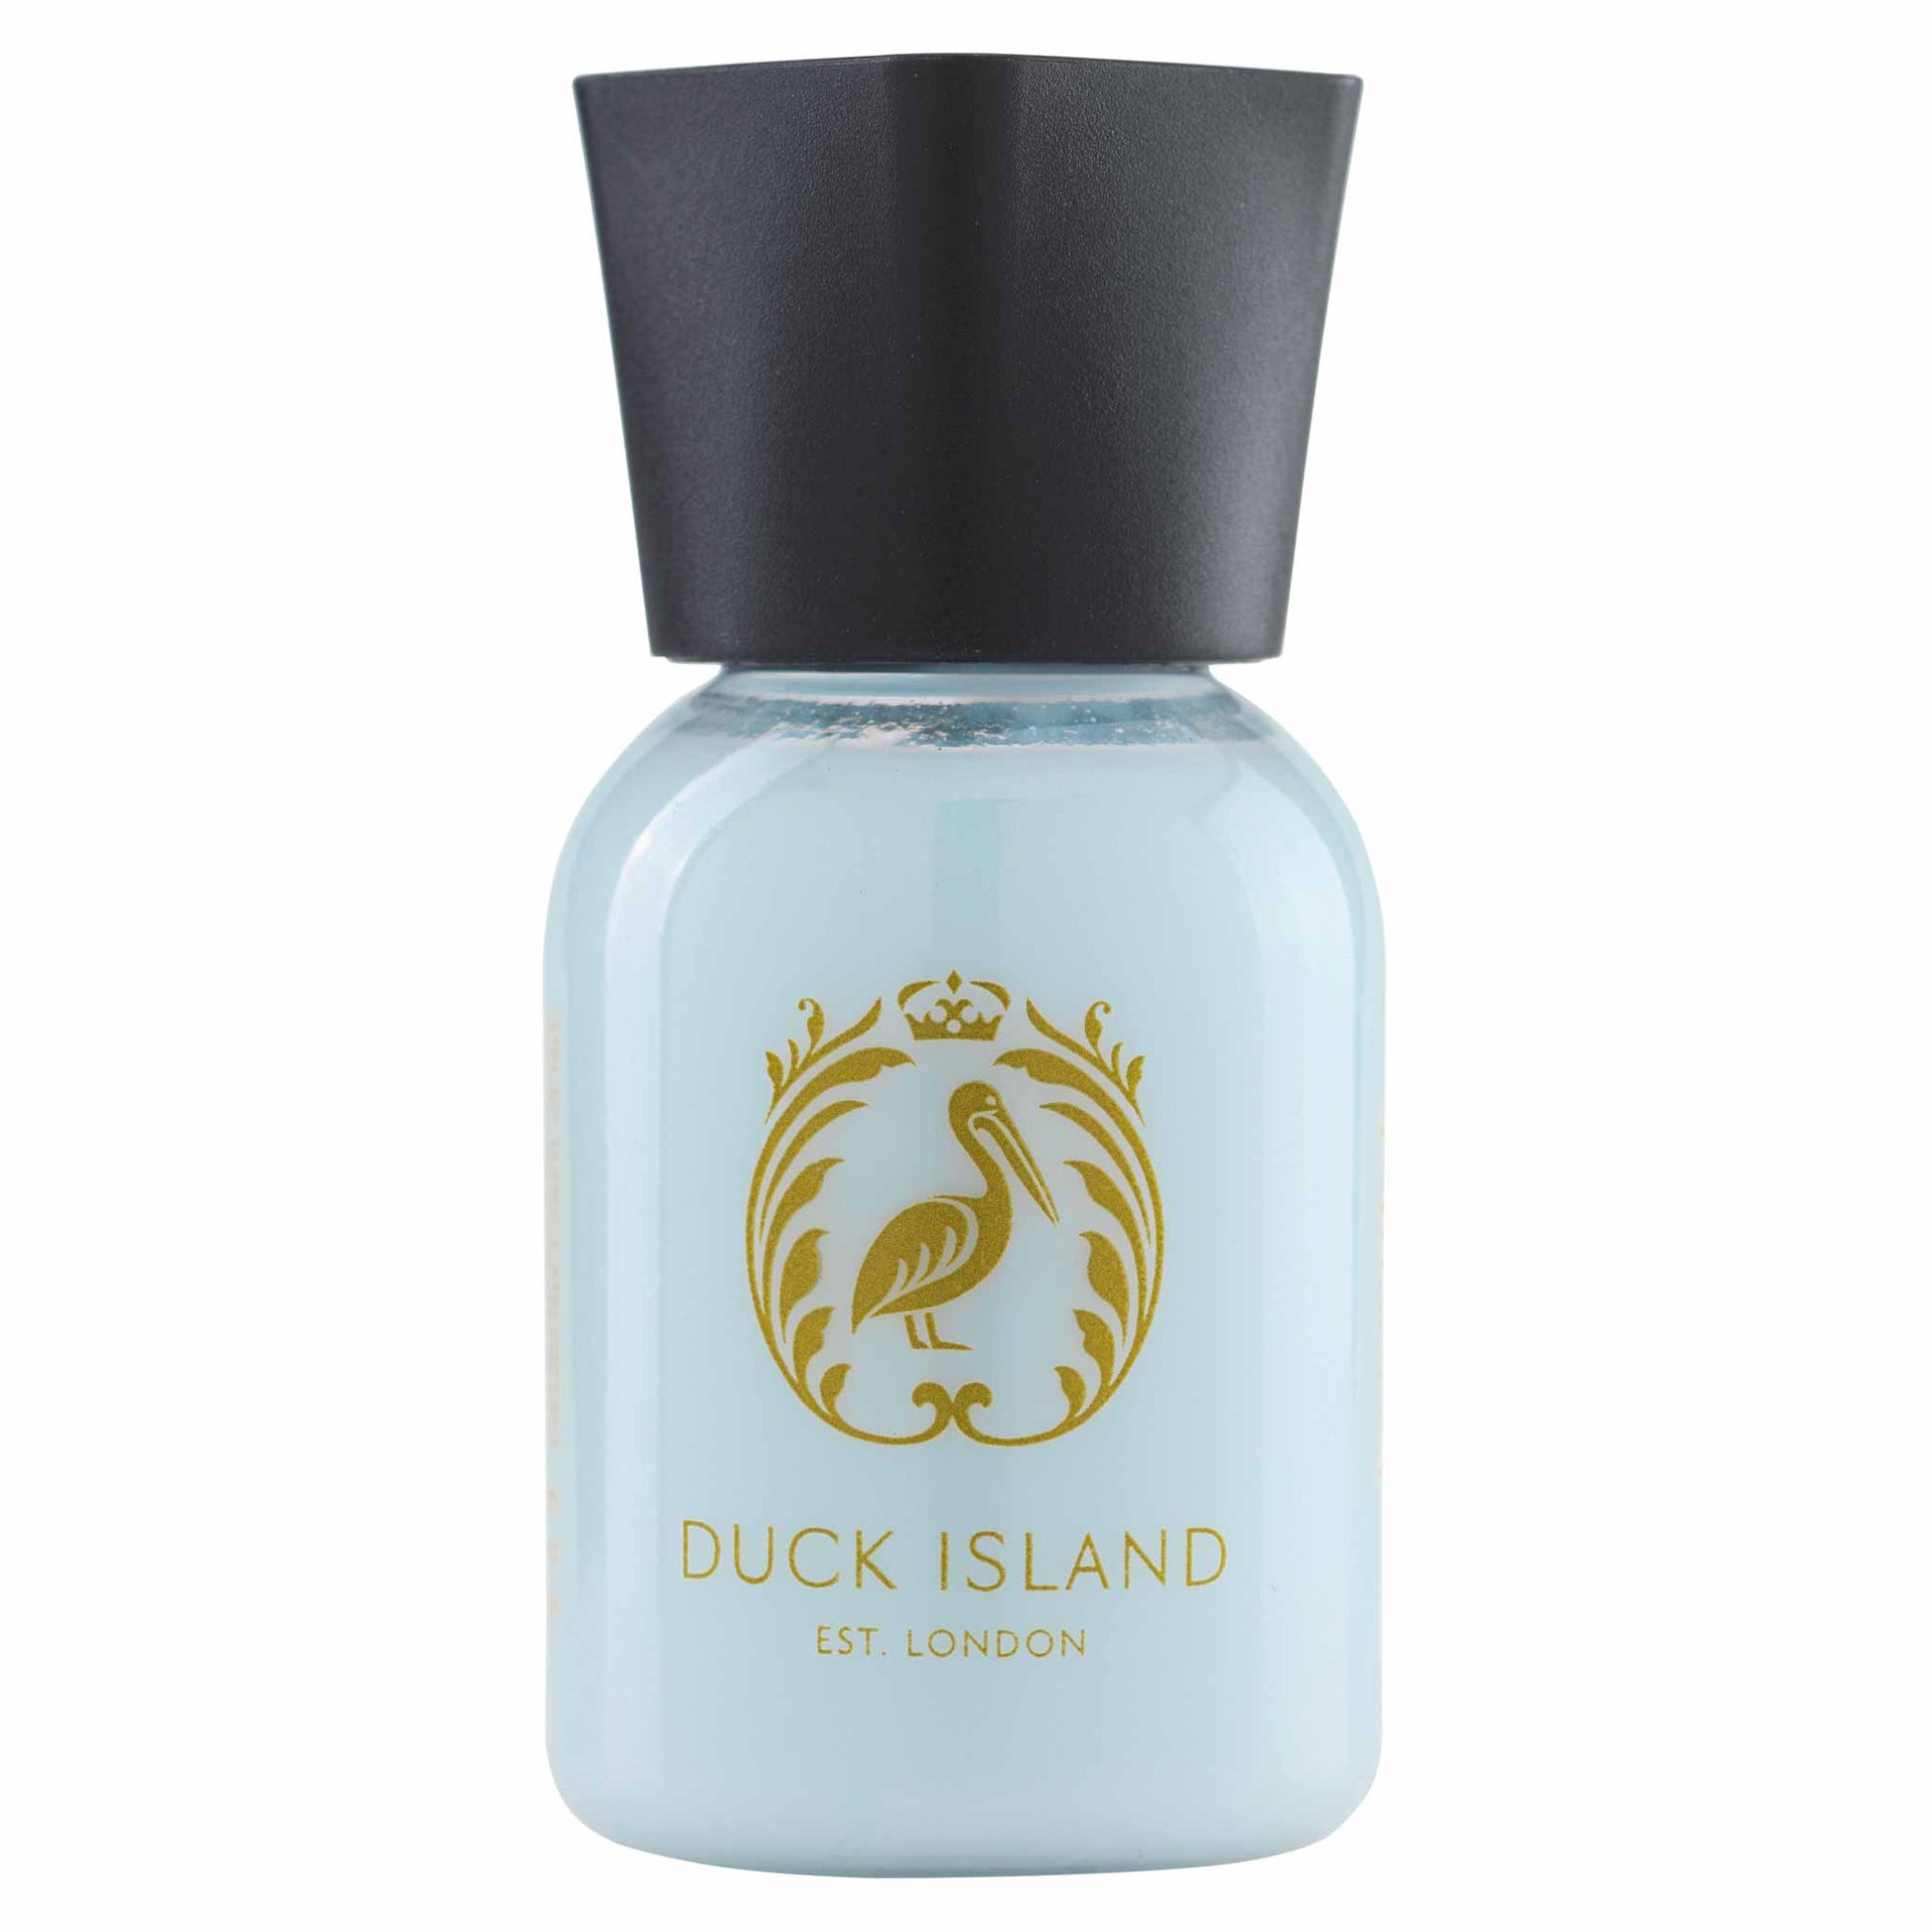 Duck Island Paradise conditioner in miniature 30ml bottle